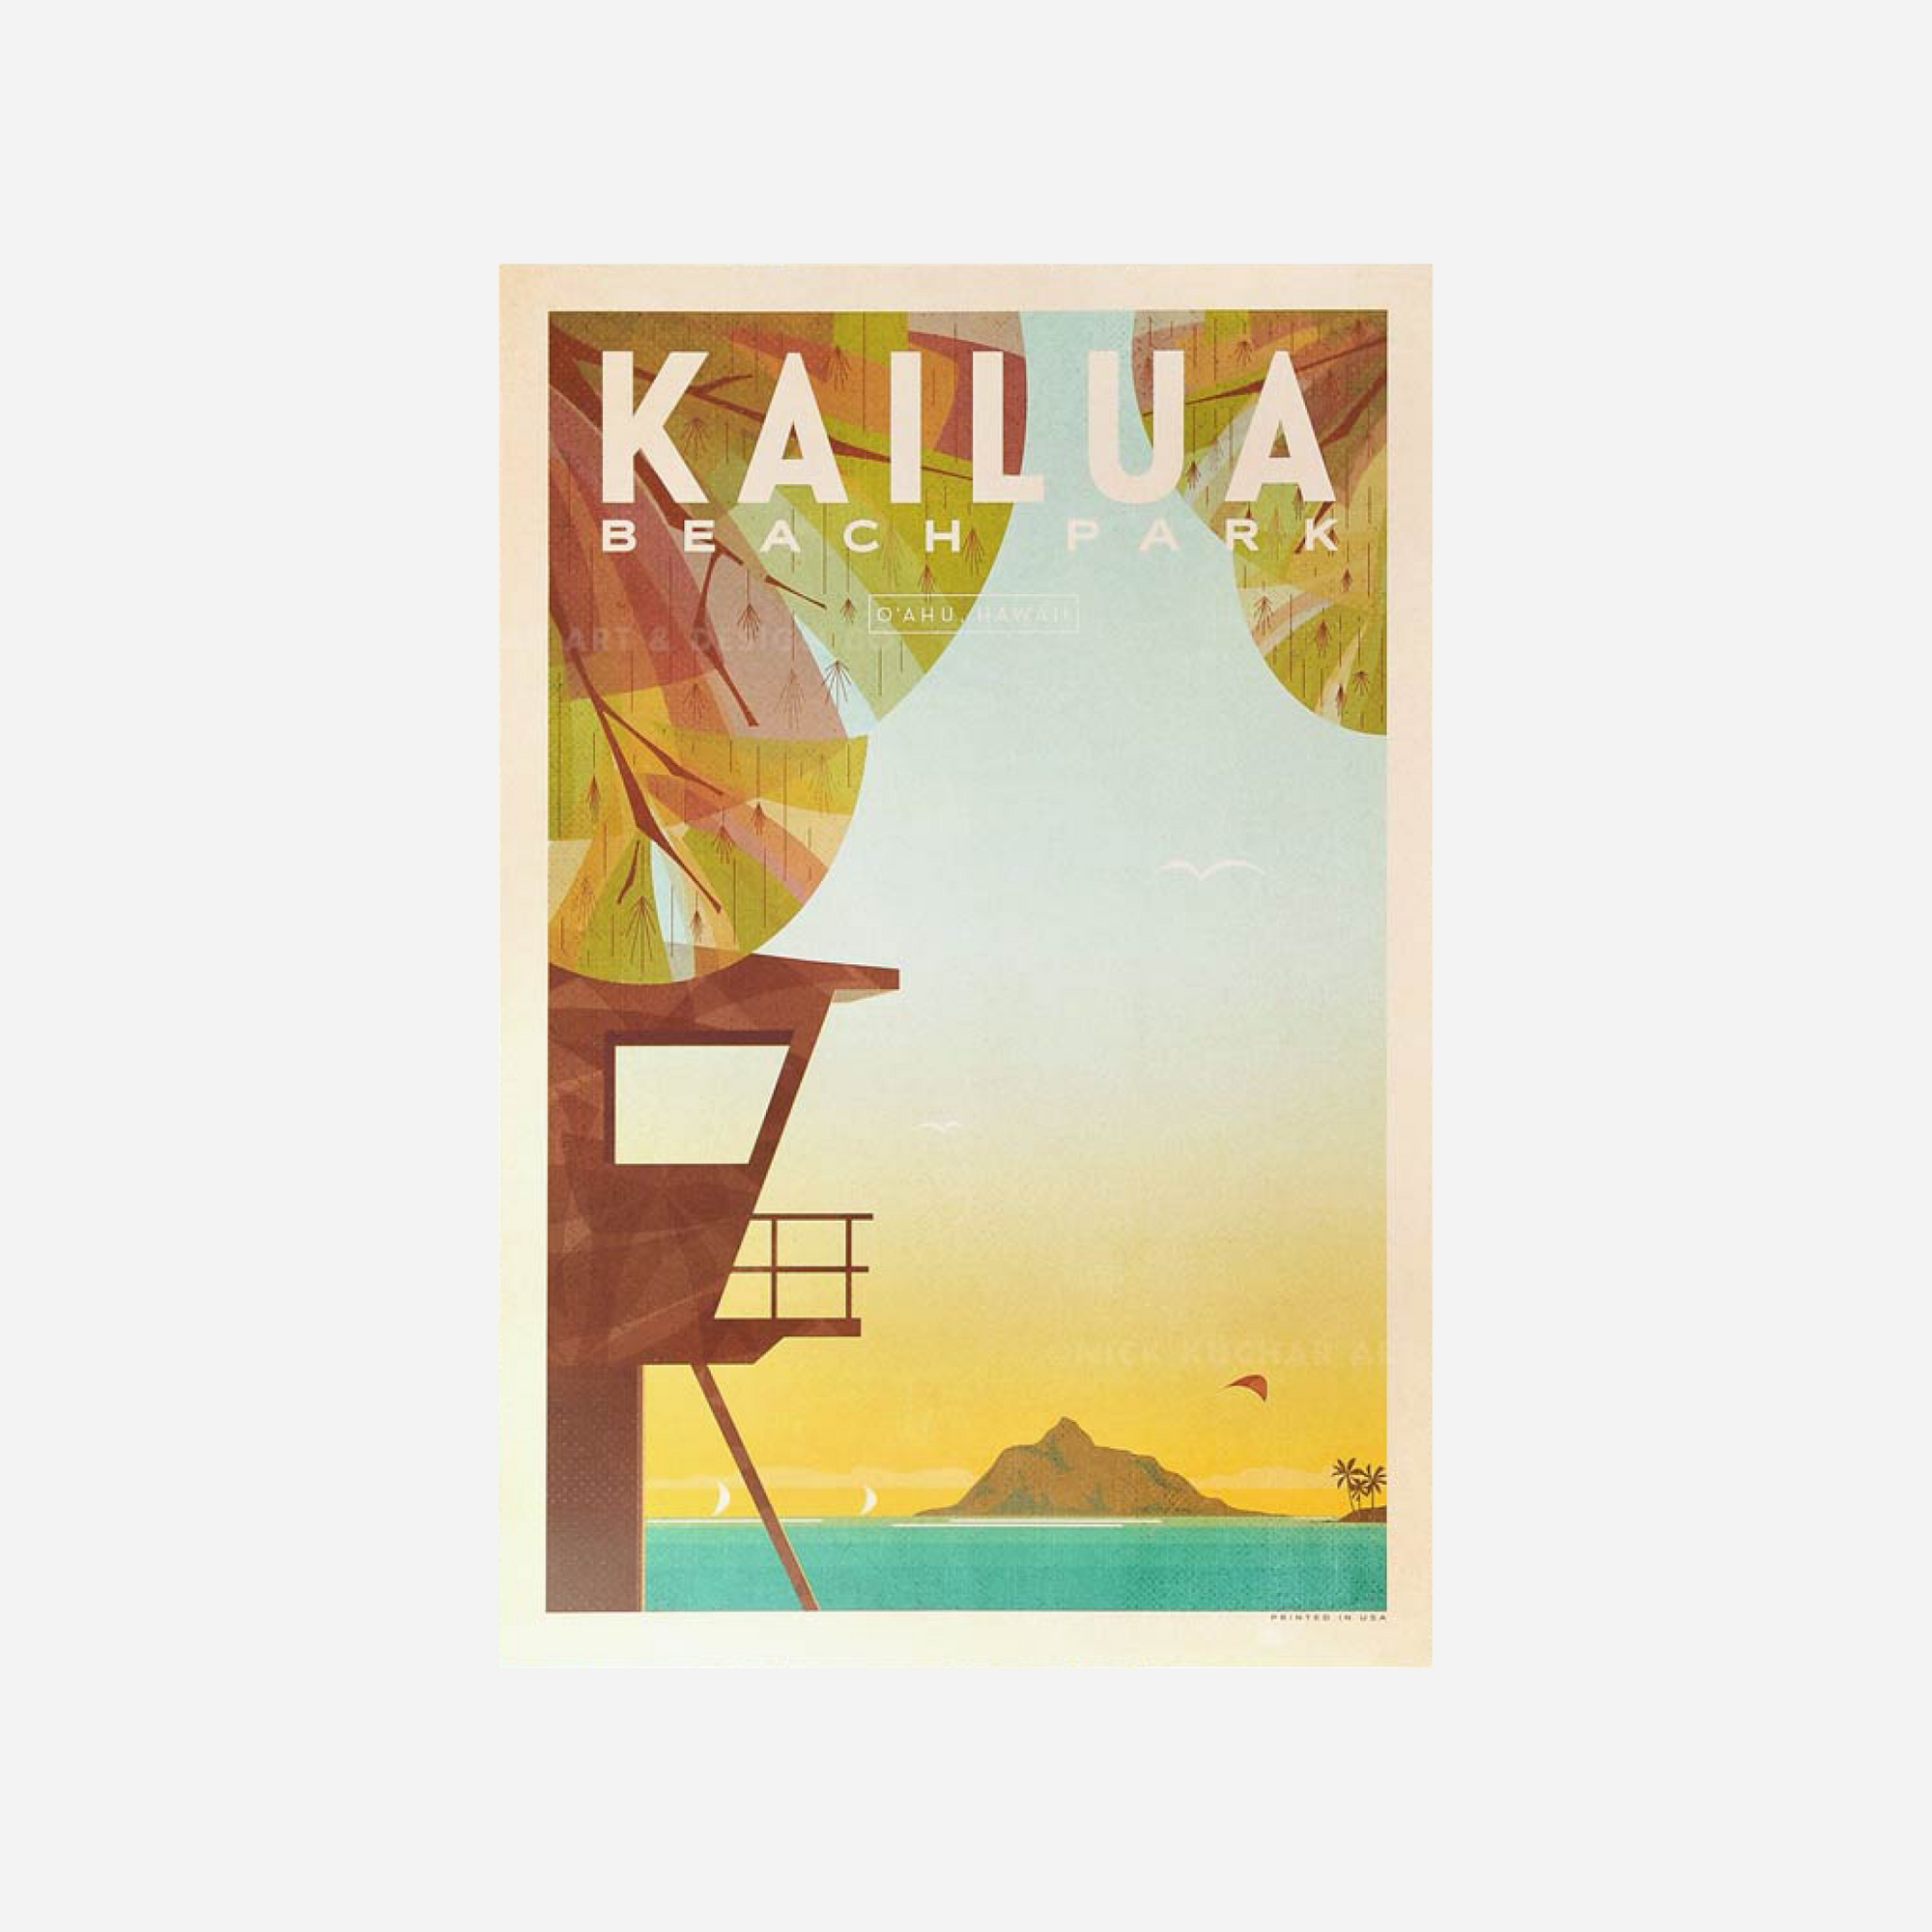 Nick Kuchar Travel Poster - Kailua Beach Park